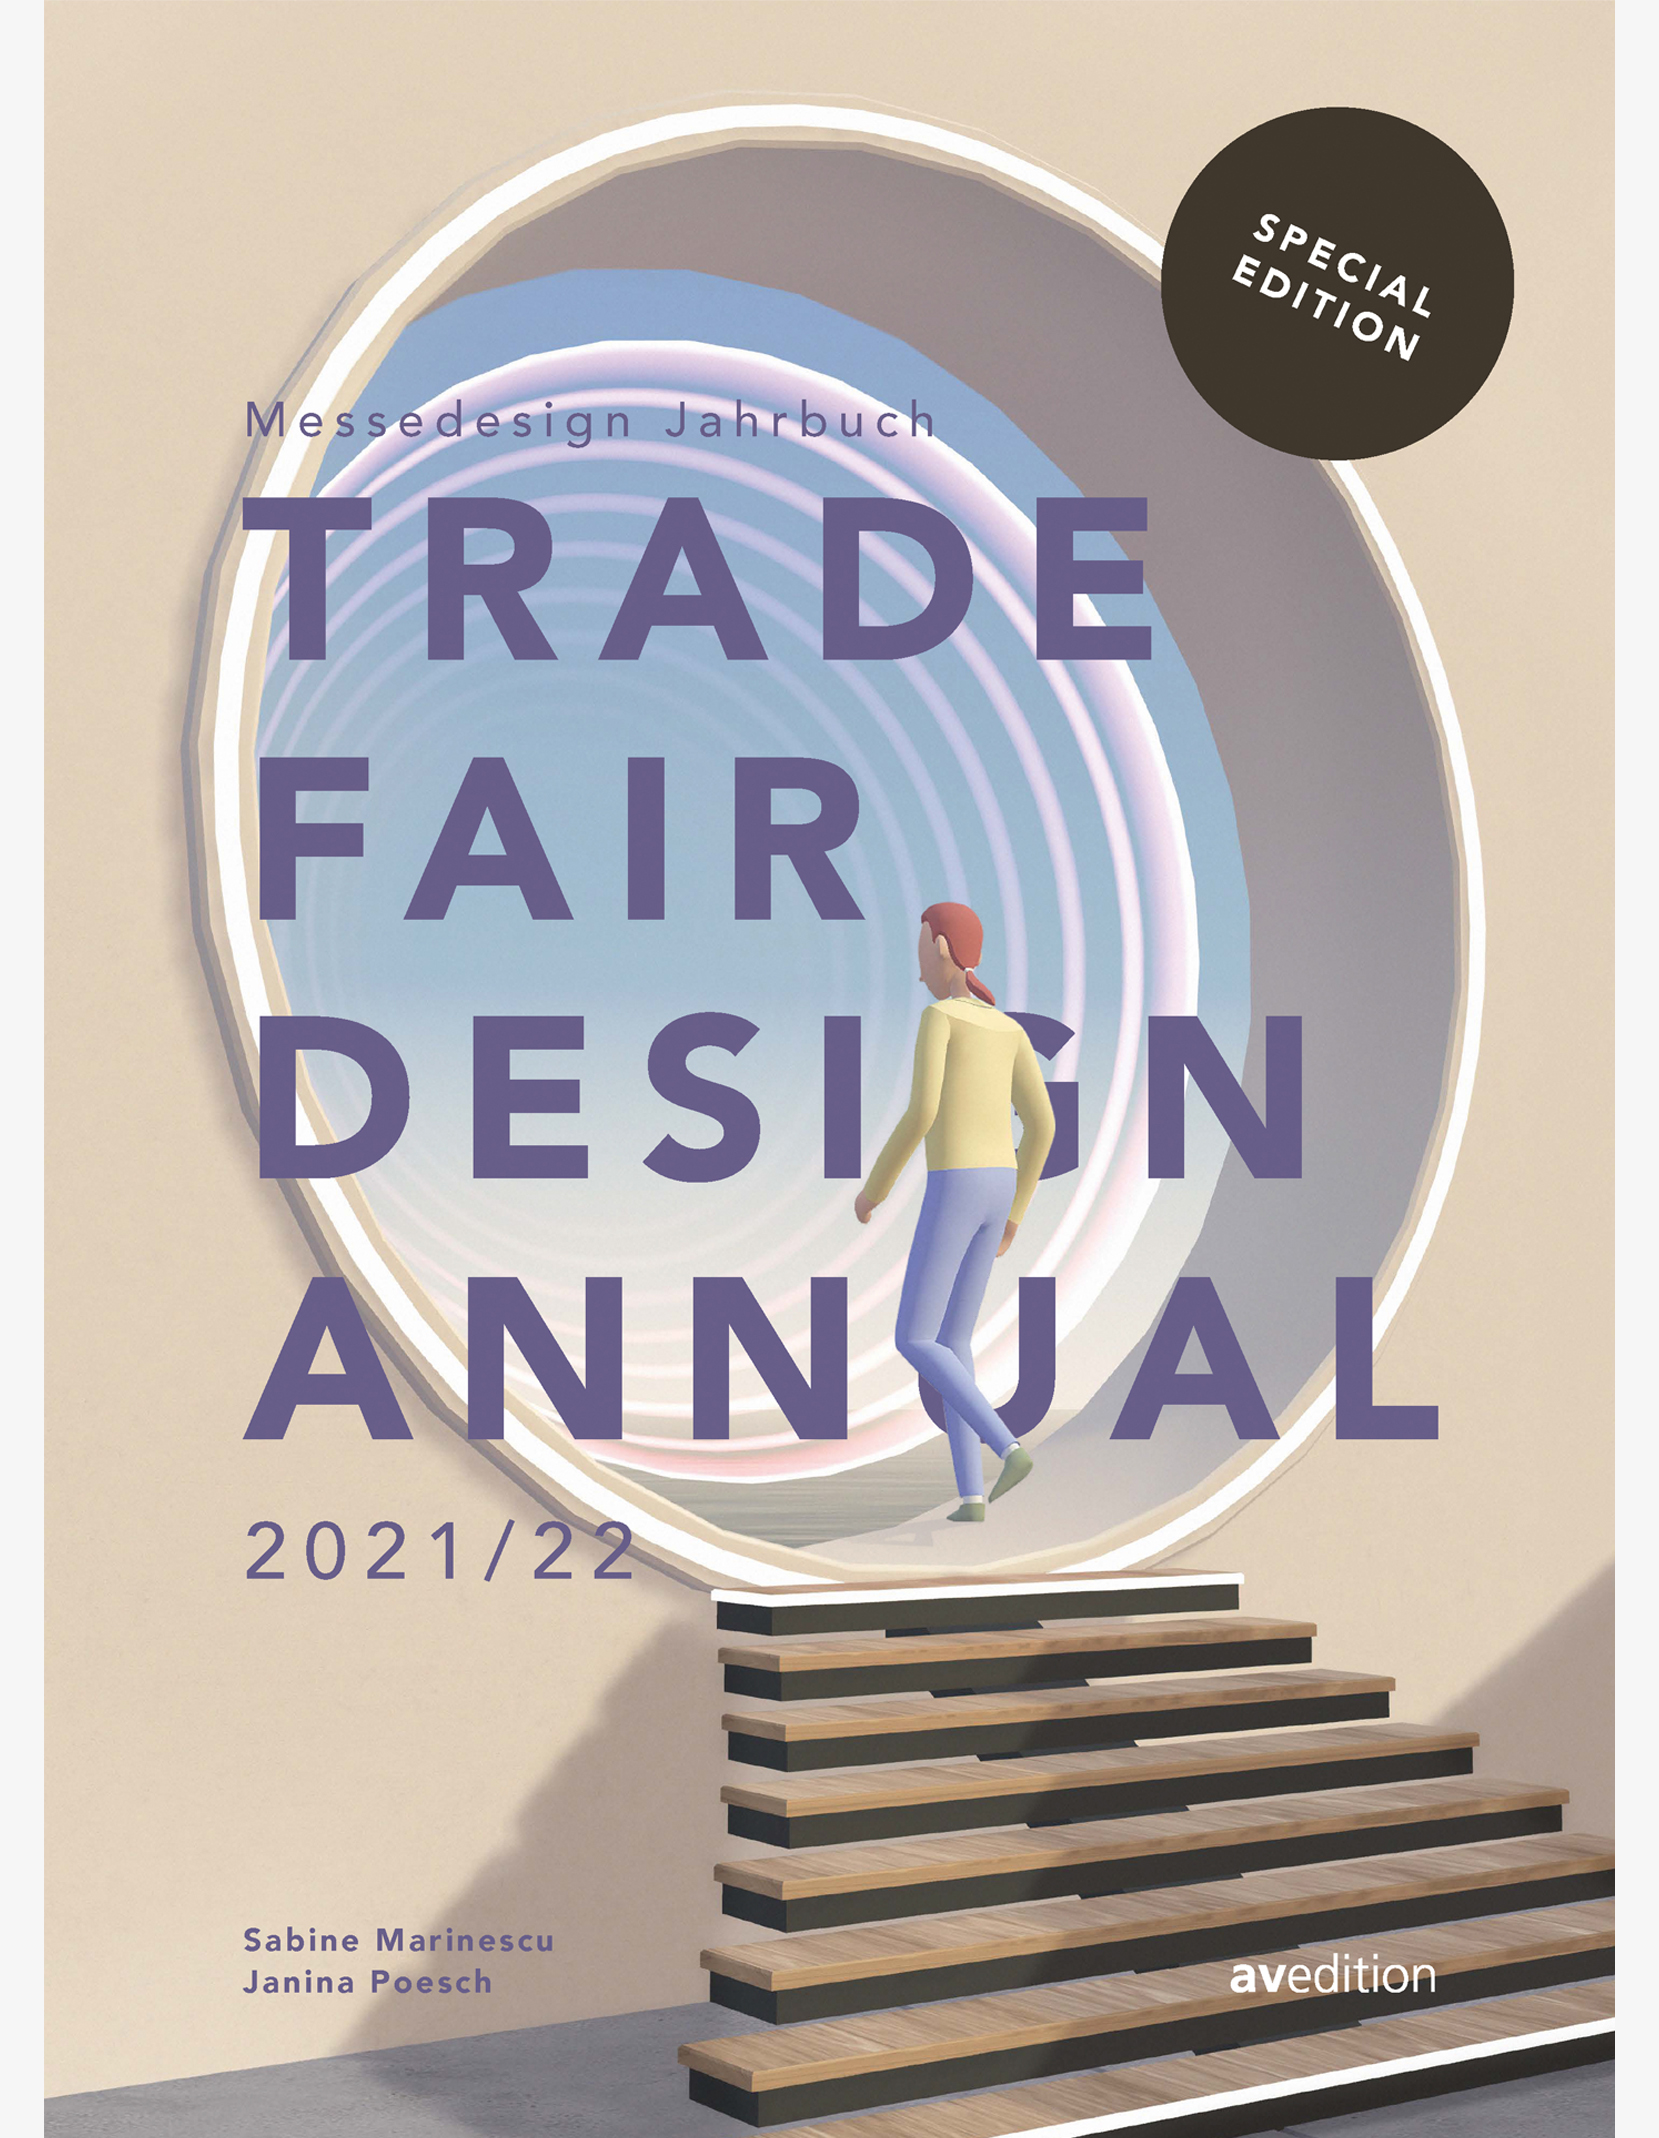 Trade Fair Design Annual 2021/22 Special Edition